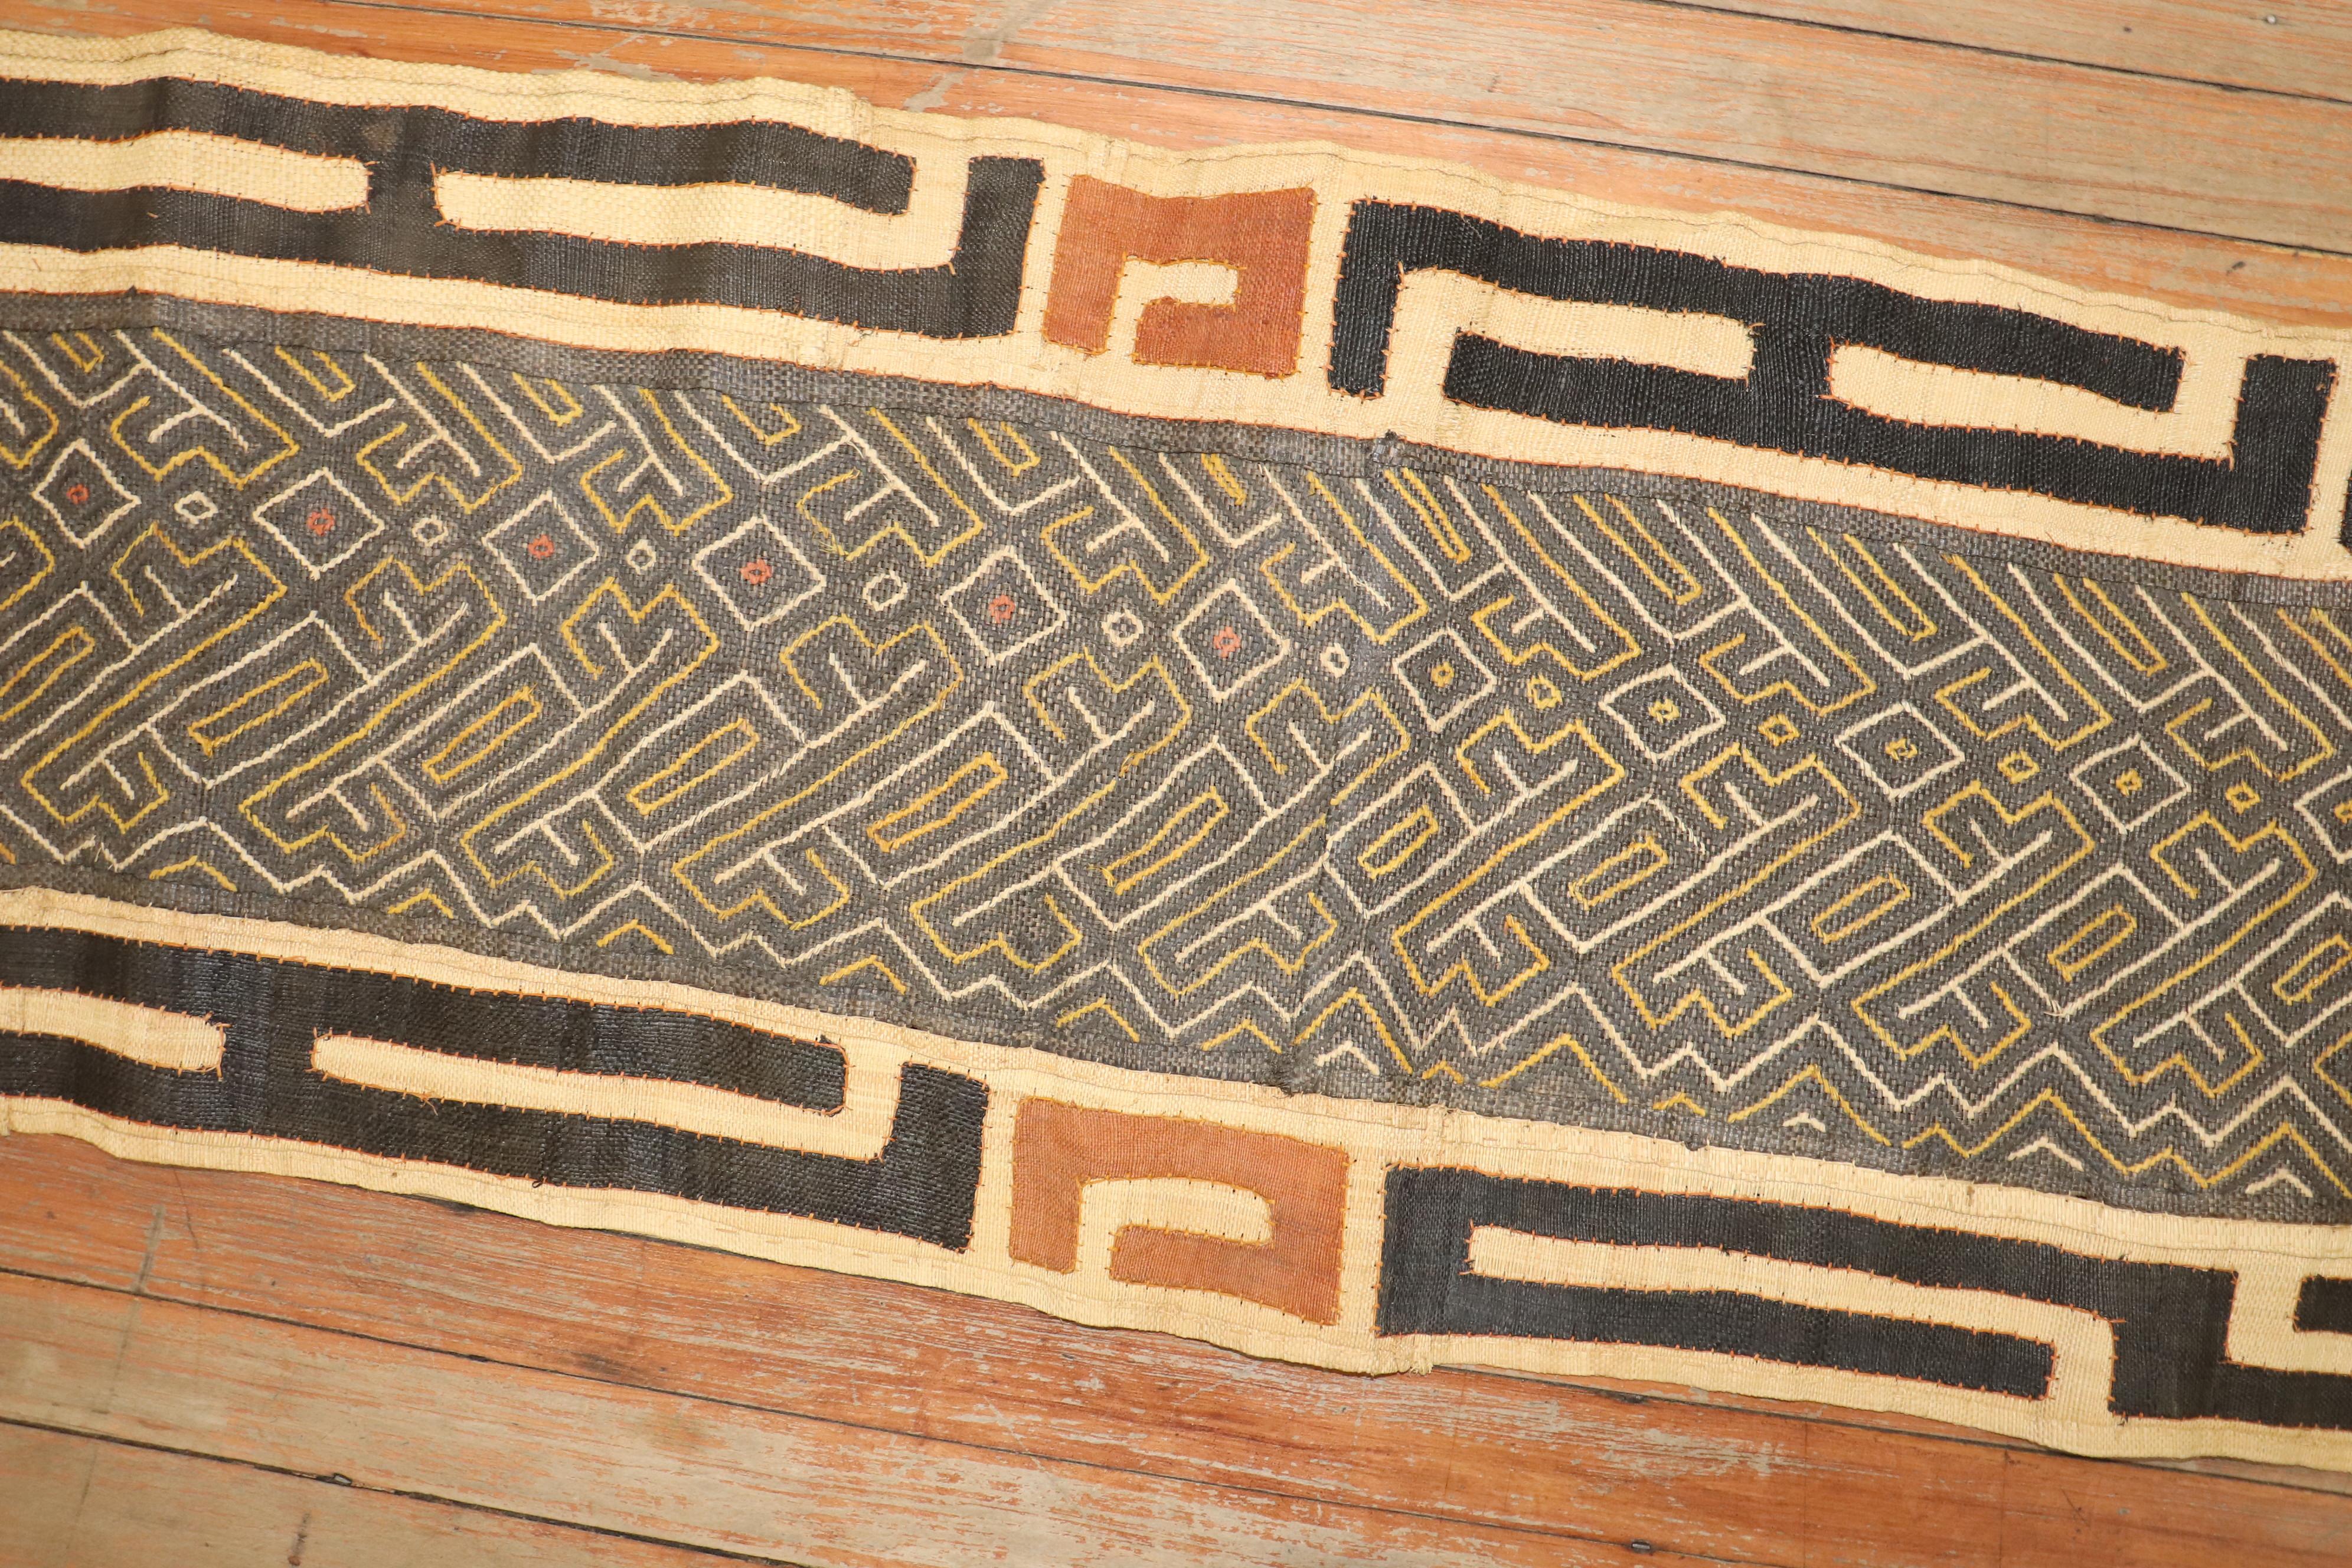 Antique  African Kuba cloth textile.
 Measures:  1'5'' x 4'2''